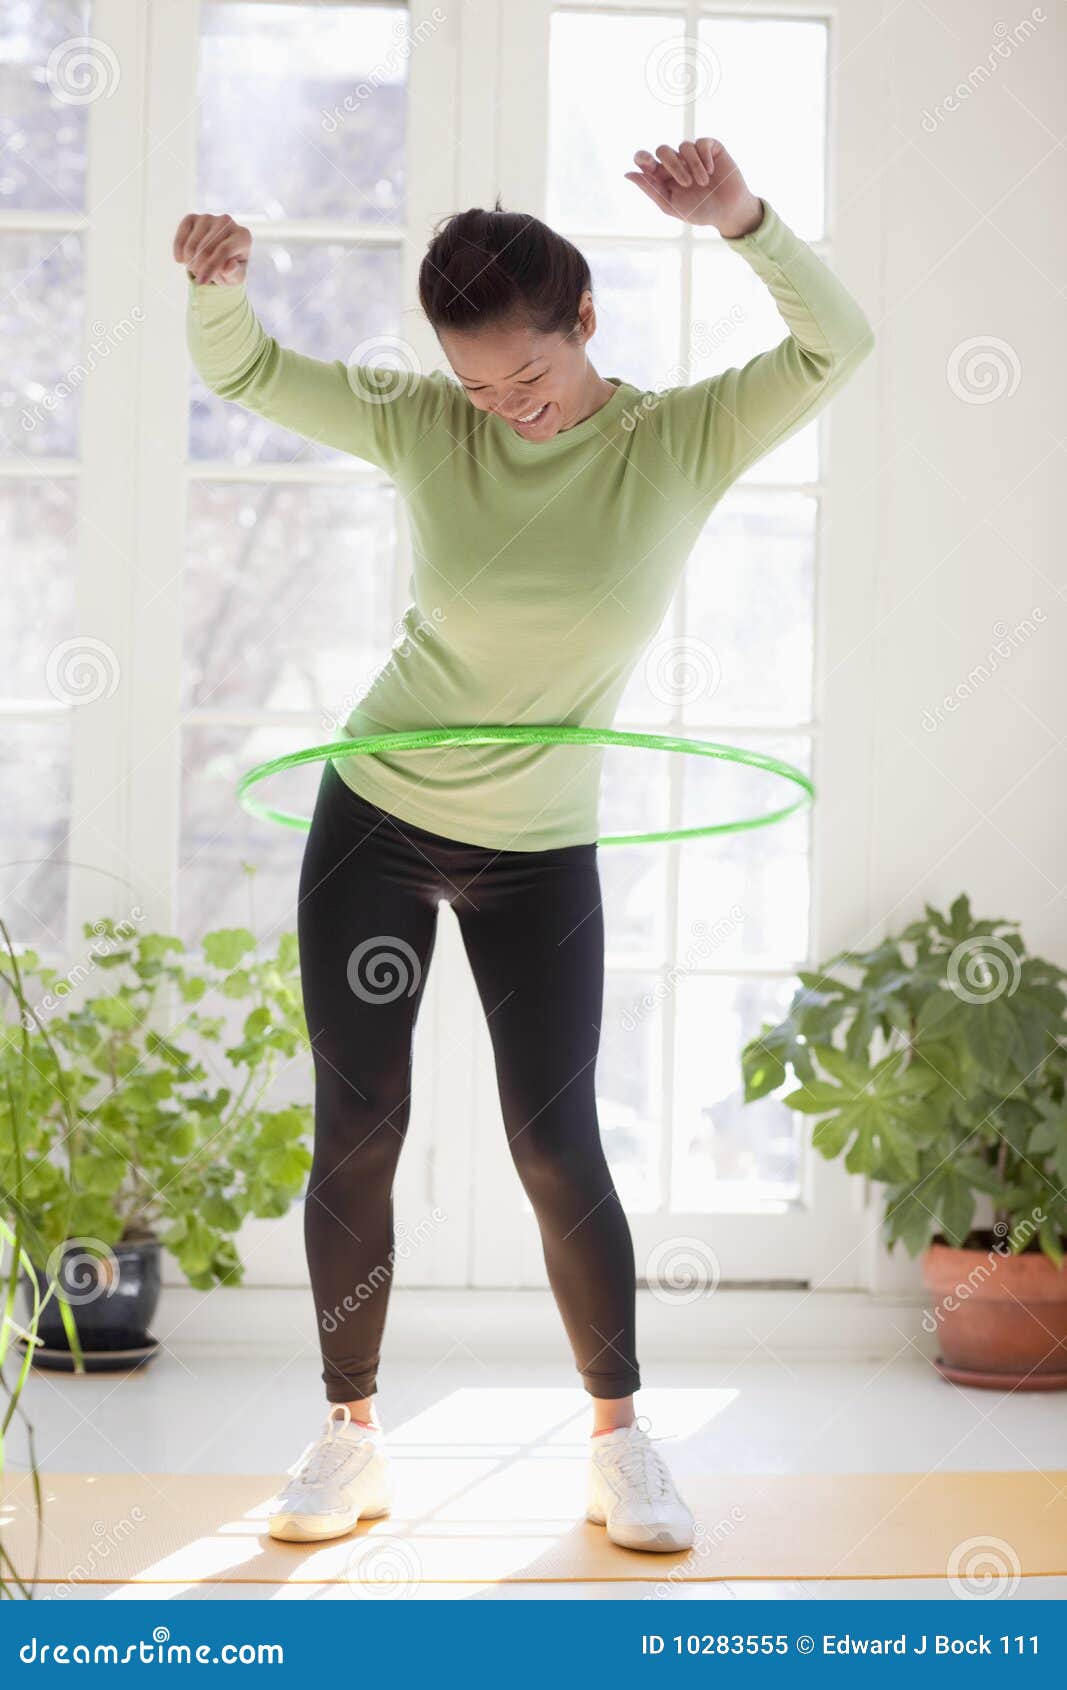 woman exercising with hula hoop